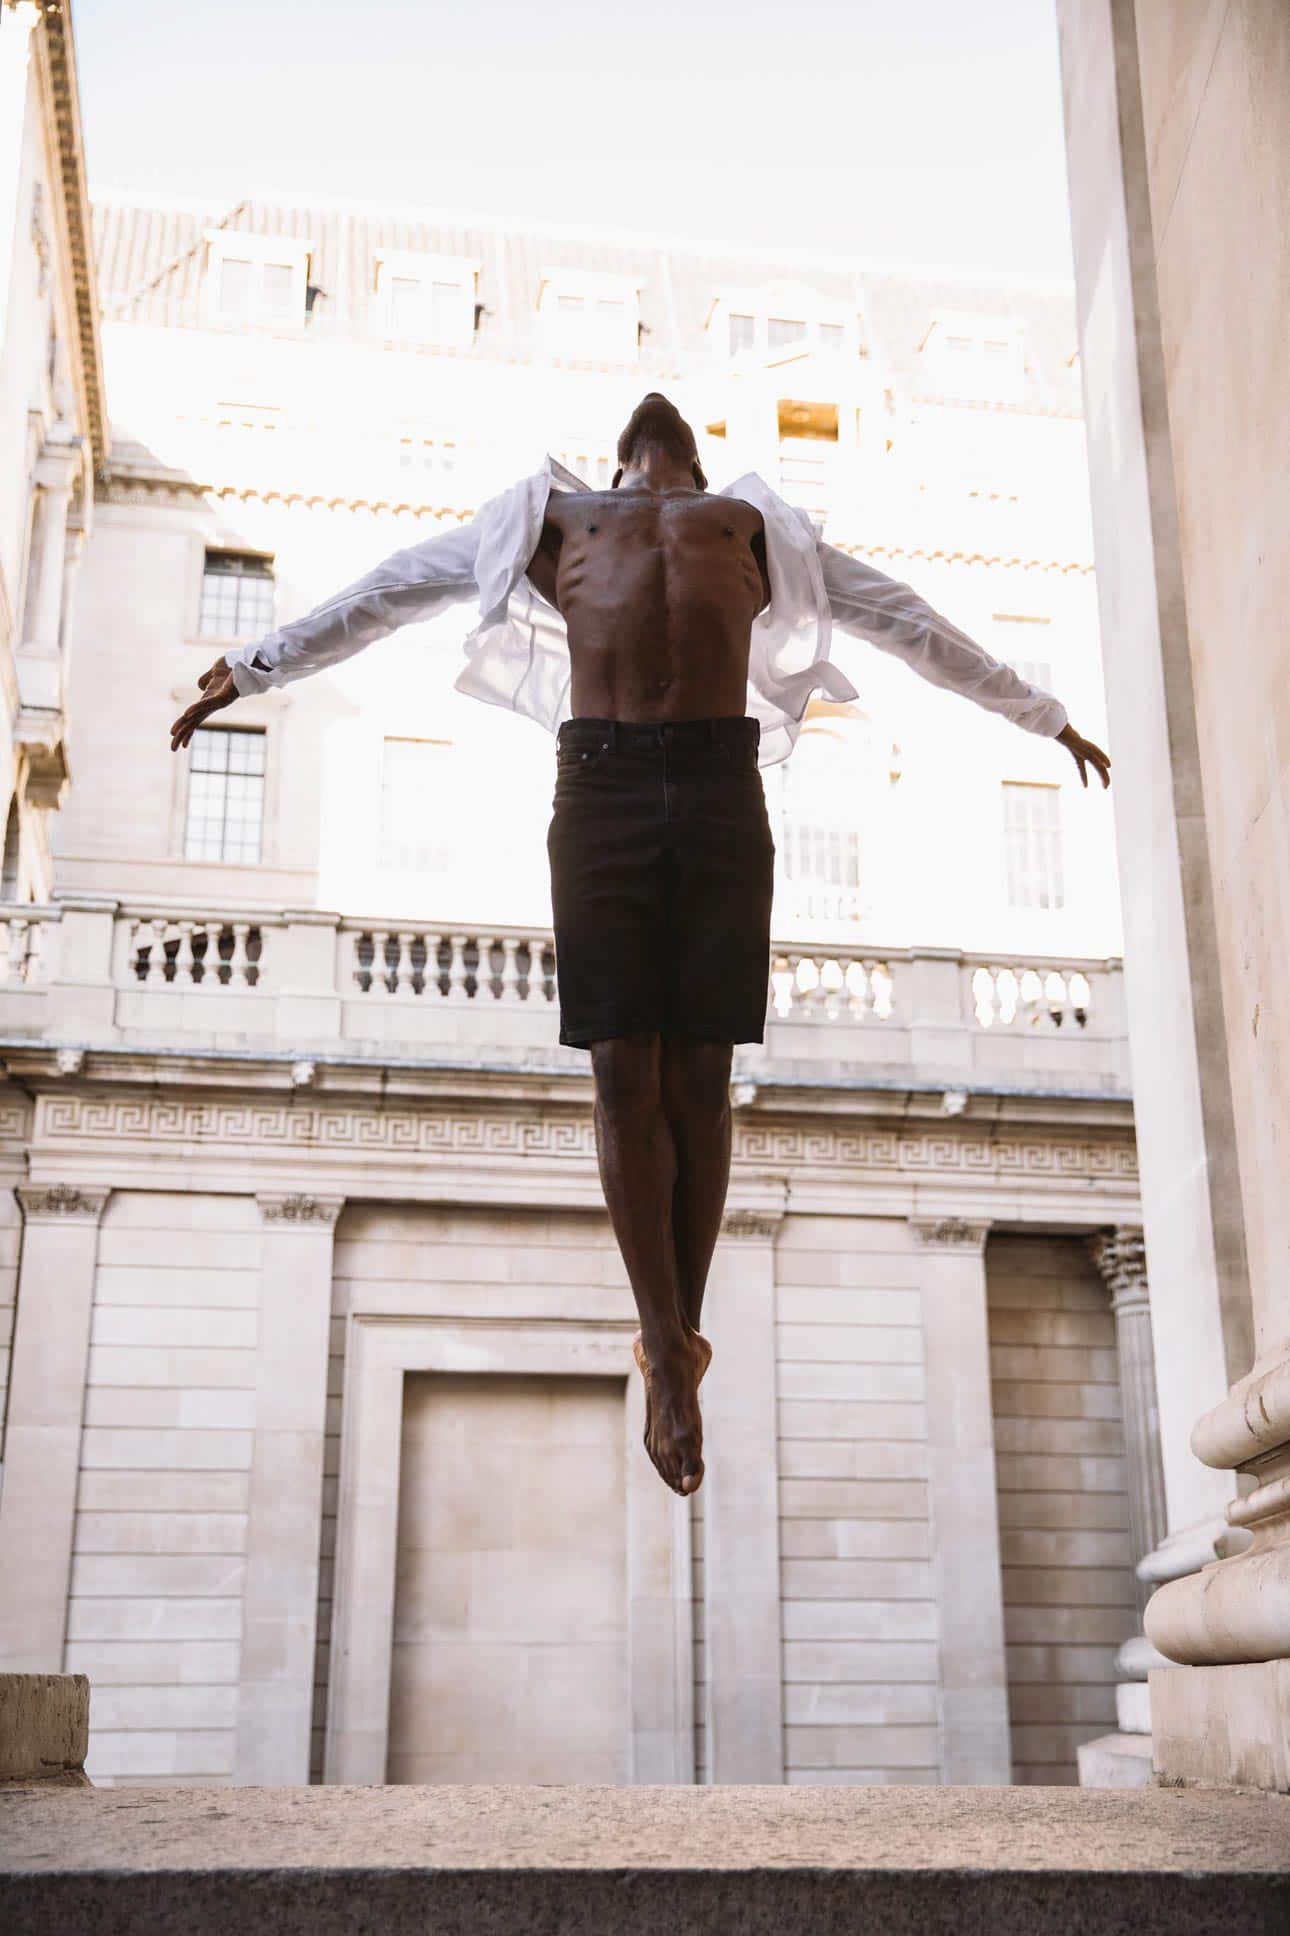 male dancer jumping high